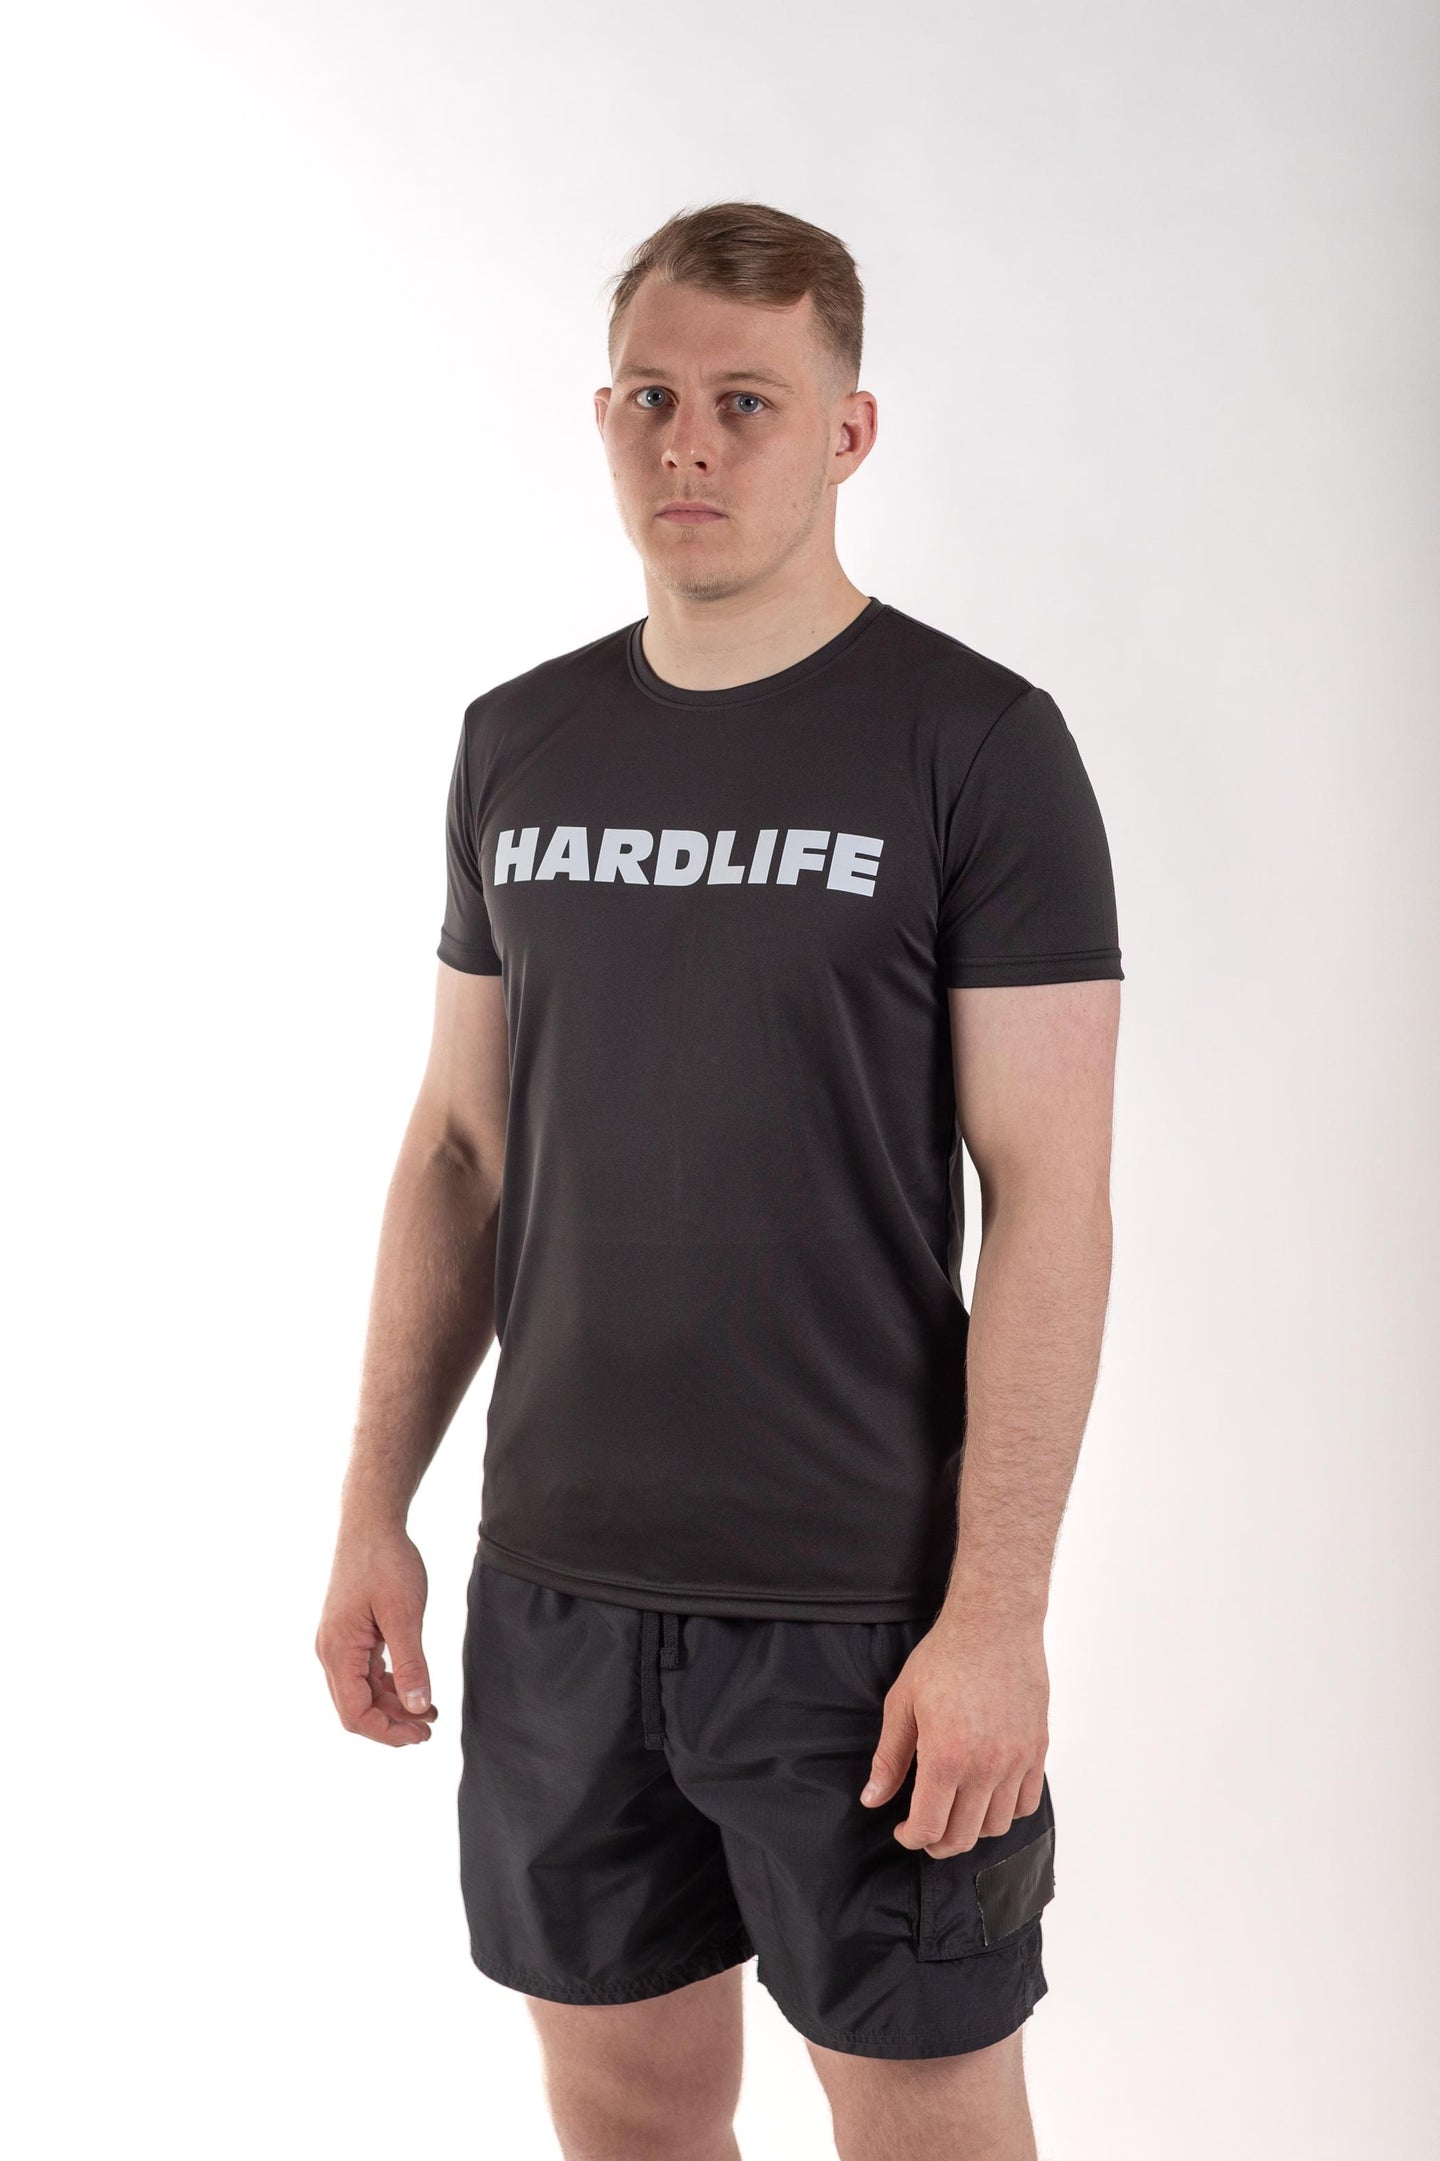 Image of Hardlife Retro Training Tee - hardlife-retro-training-tee: Experience a throwback to classic athletic wear with the Men's Hardlife Retro Training Tee